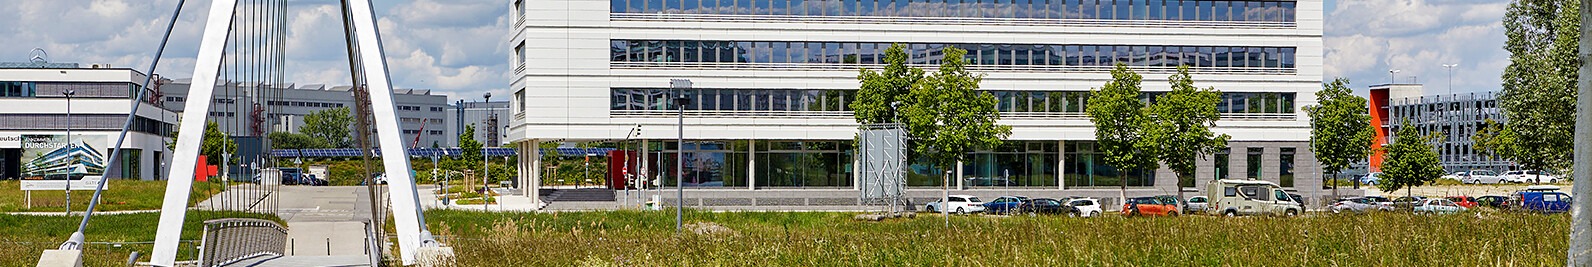 Wörwag Pharma GmbH & Co. KG background